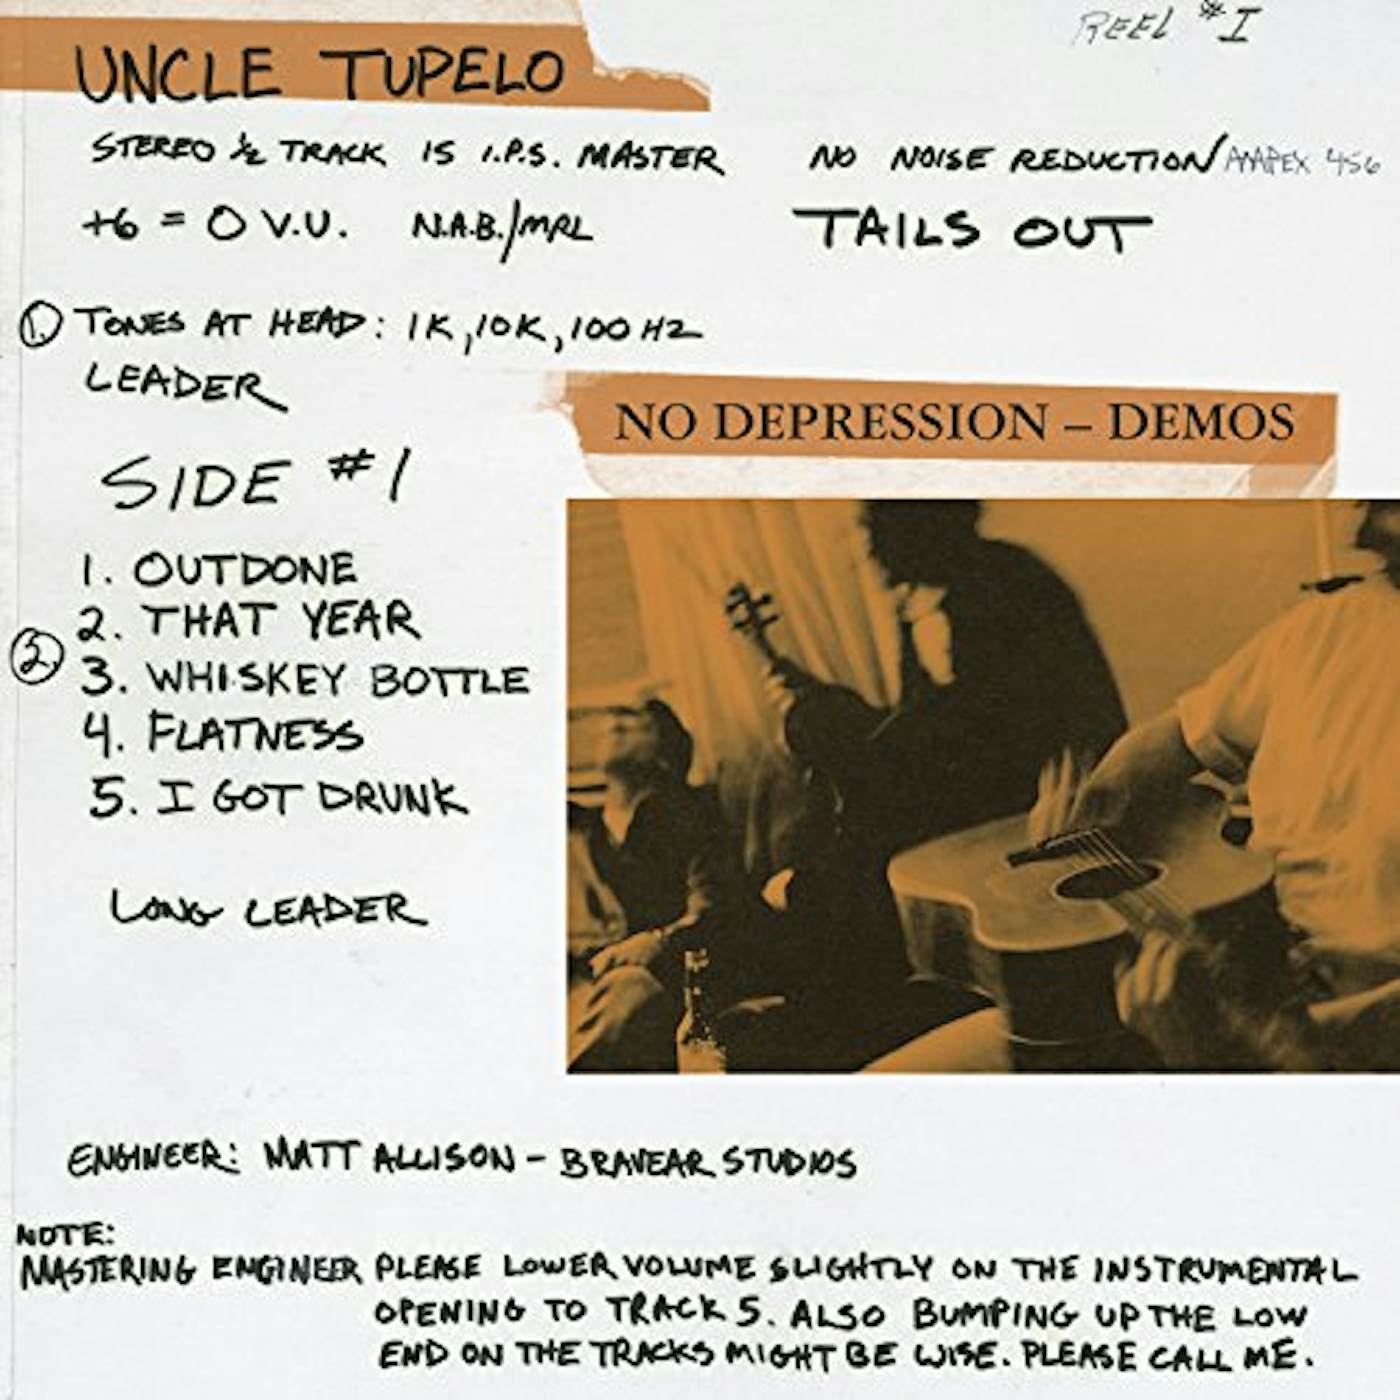 Uncle Tupelo NO DEPRESSION: RARITIES Vinyl Record